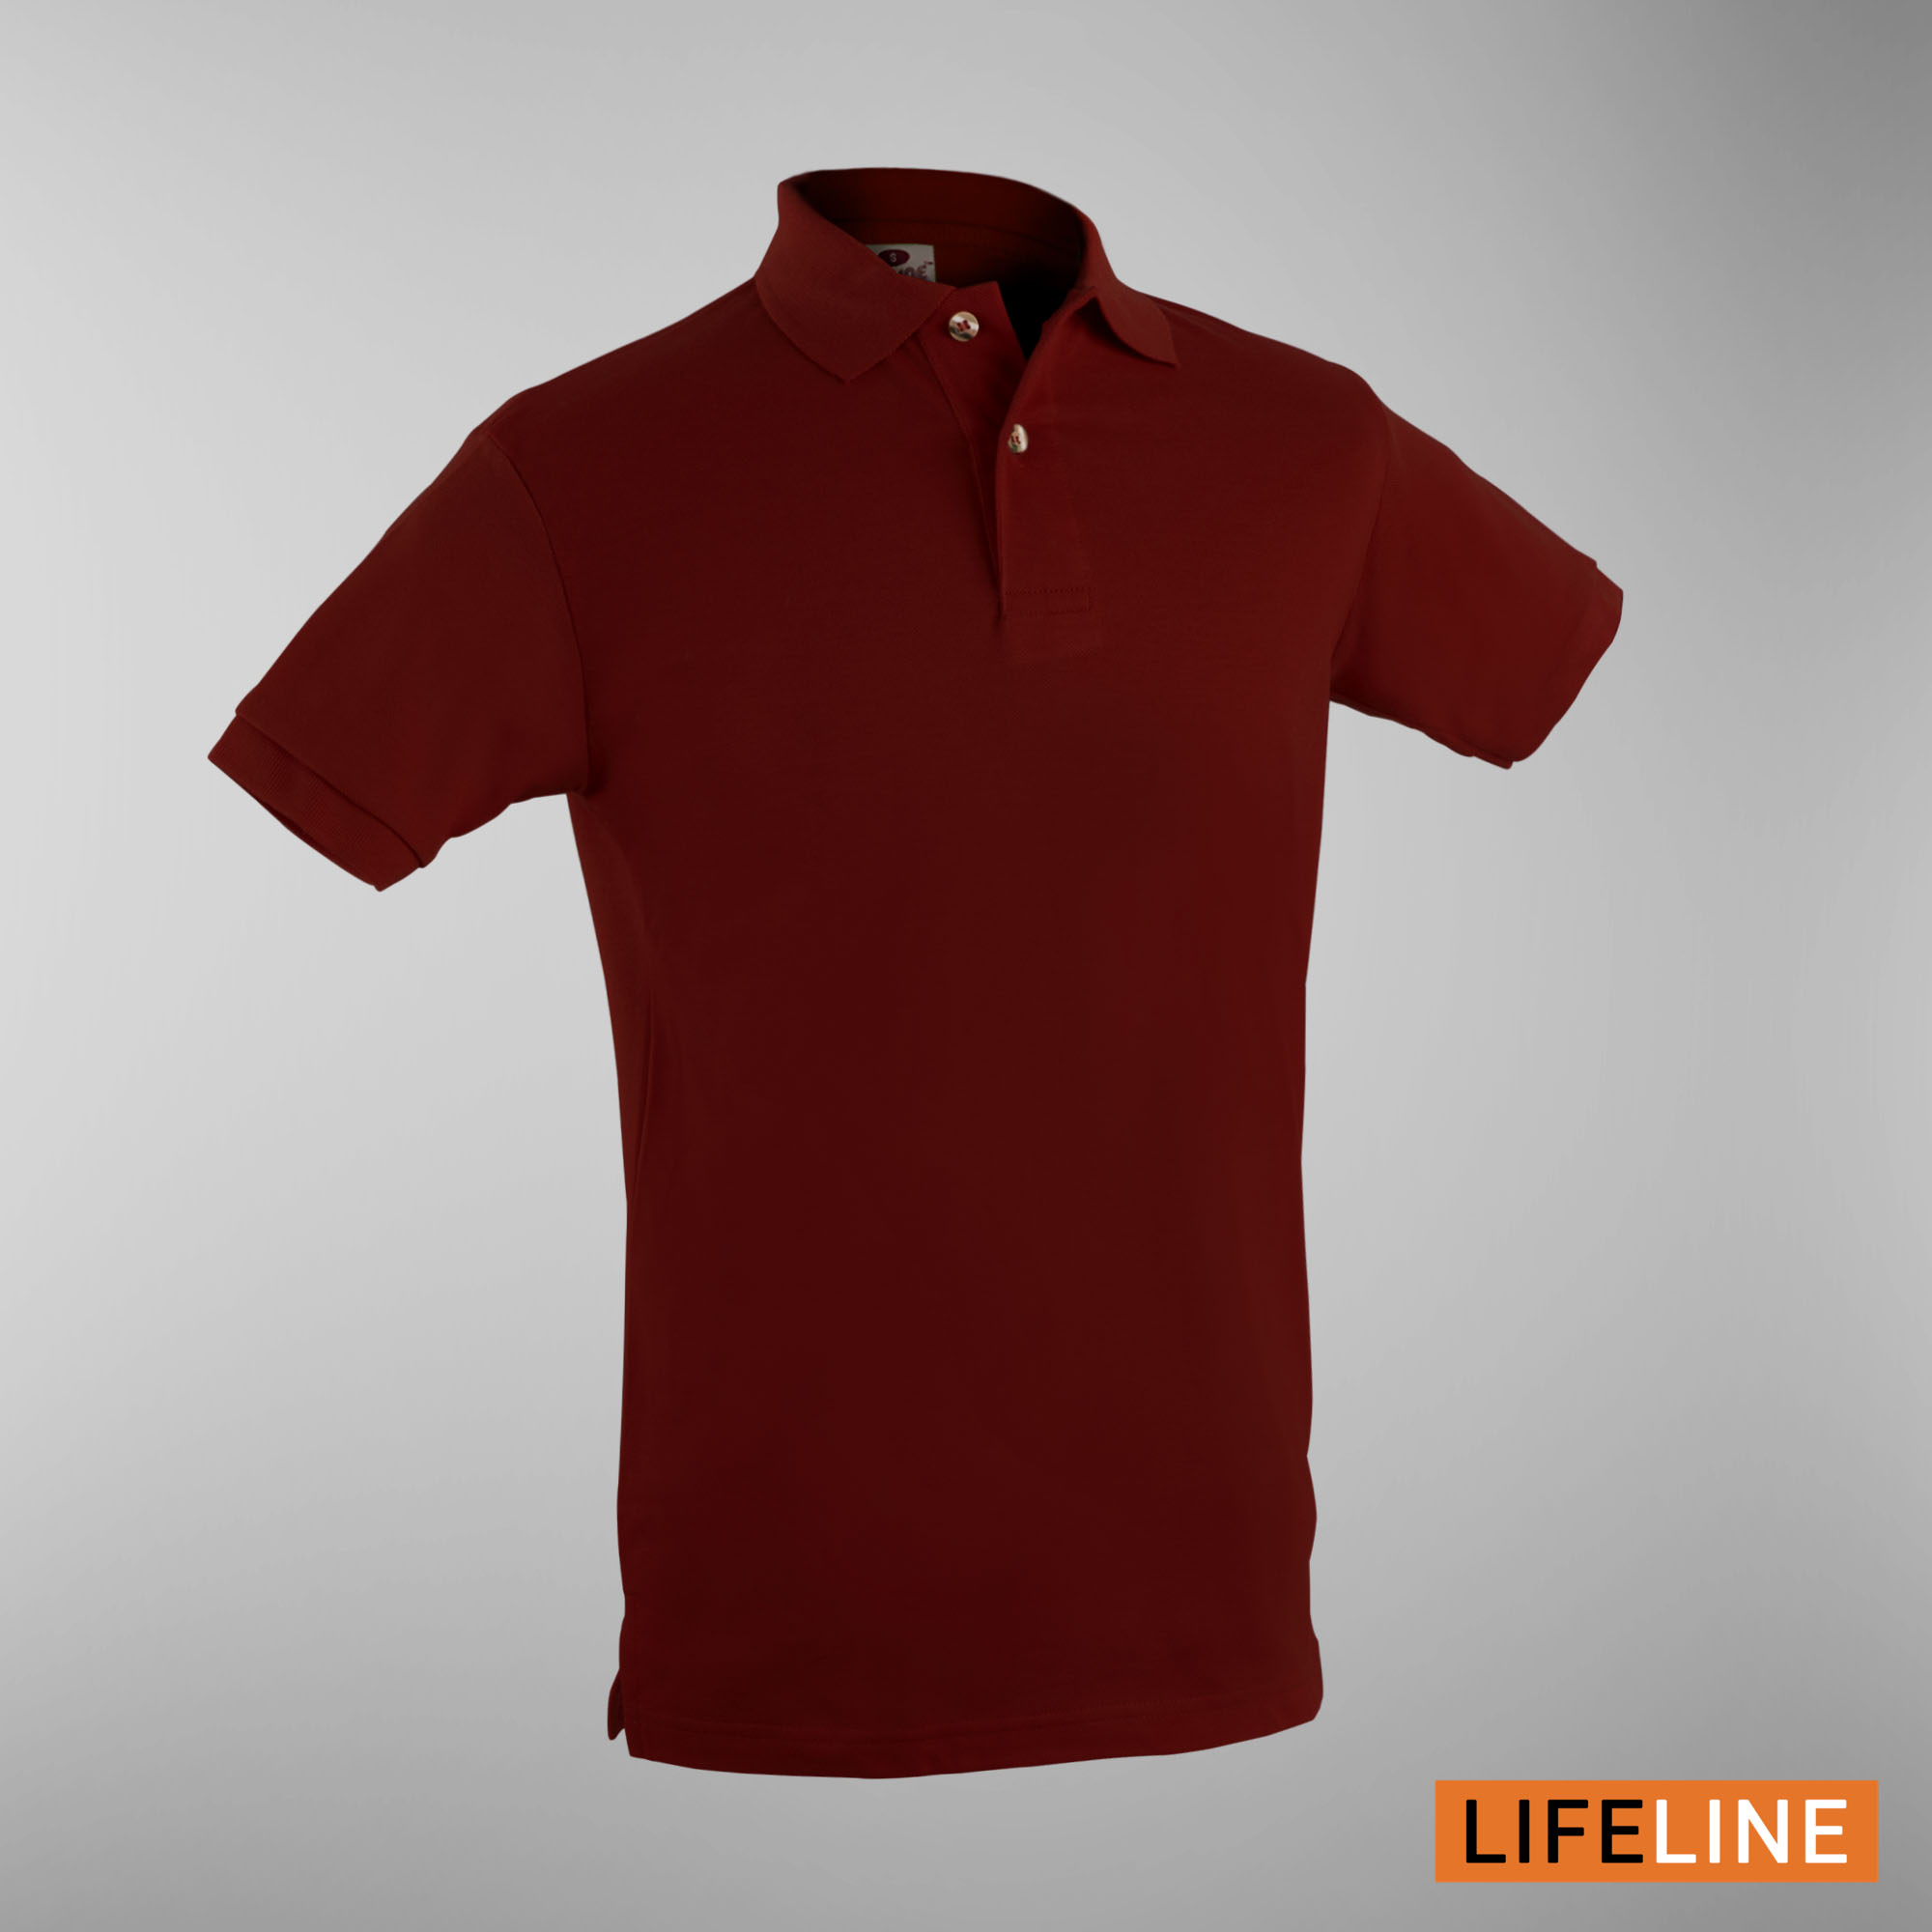 Lifeline Men’s Poloshirt (Berry Red)